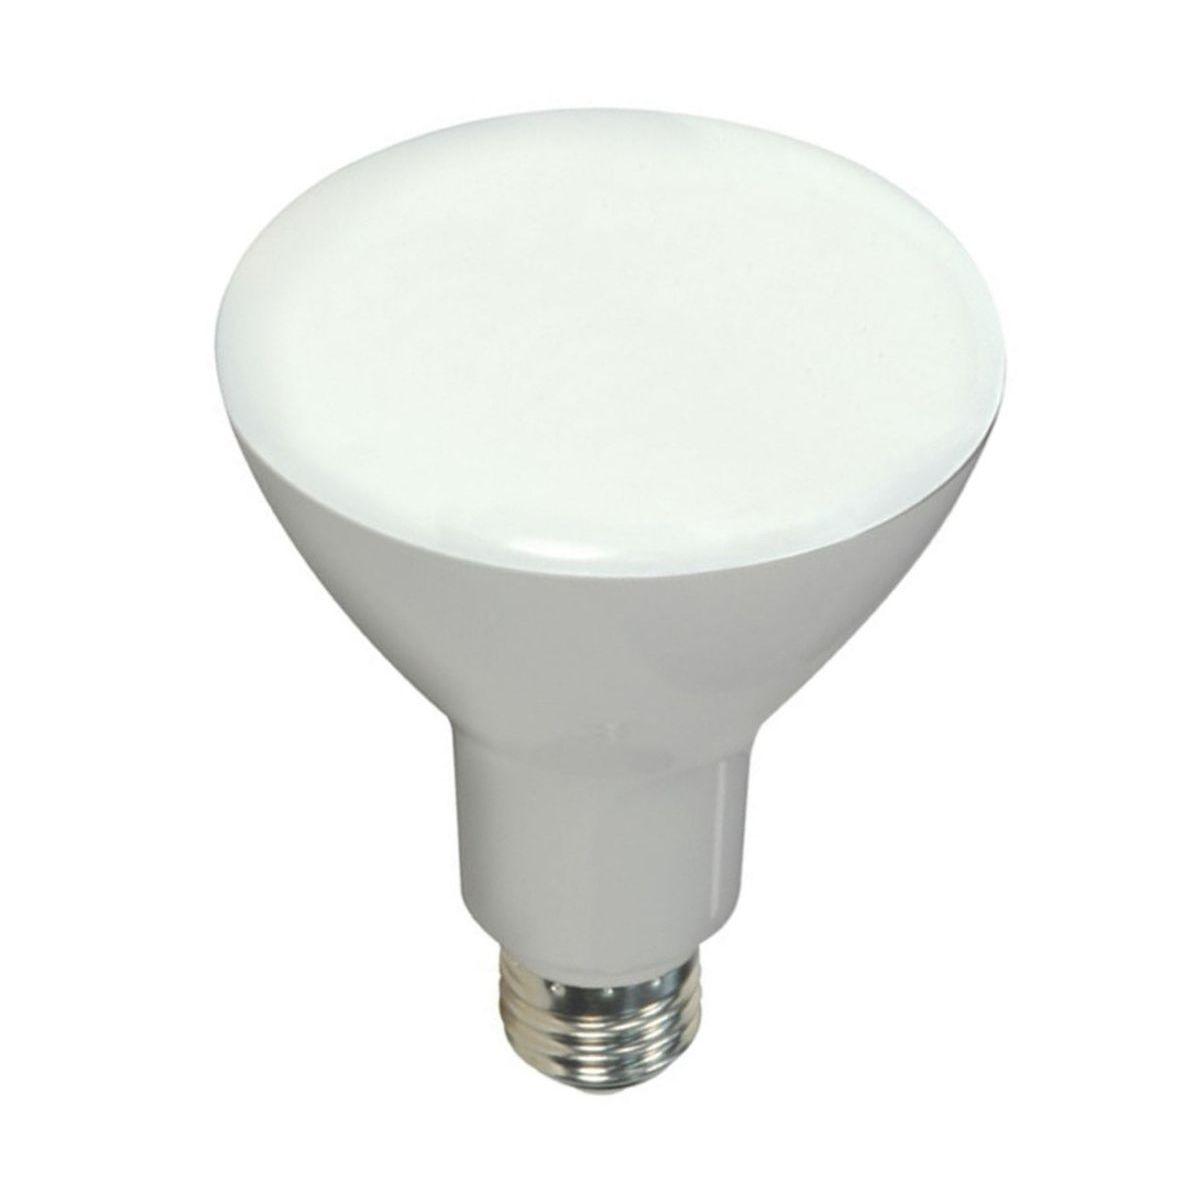 LED R30/BR30 Reflector bulb, 7 watt, 650 Lumens, 3000K, E26 Medium Base, 105 Deg. Flood